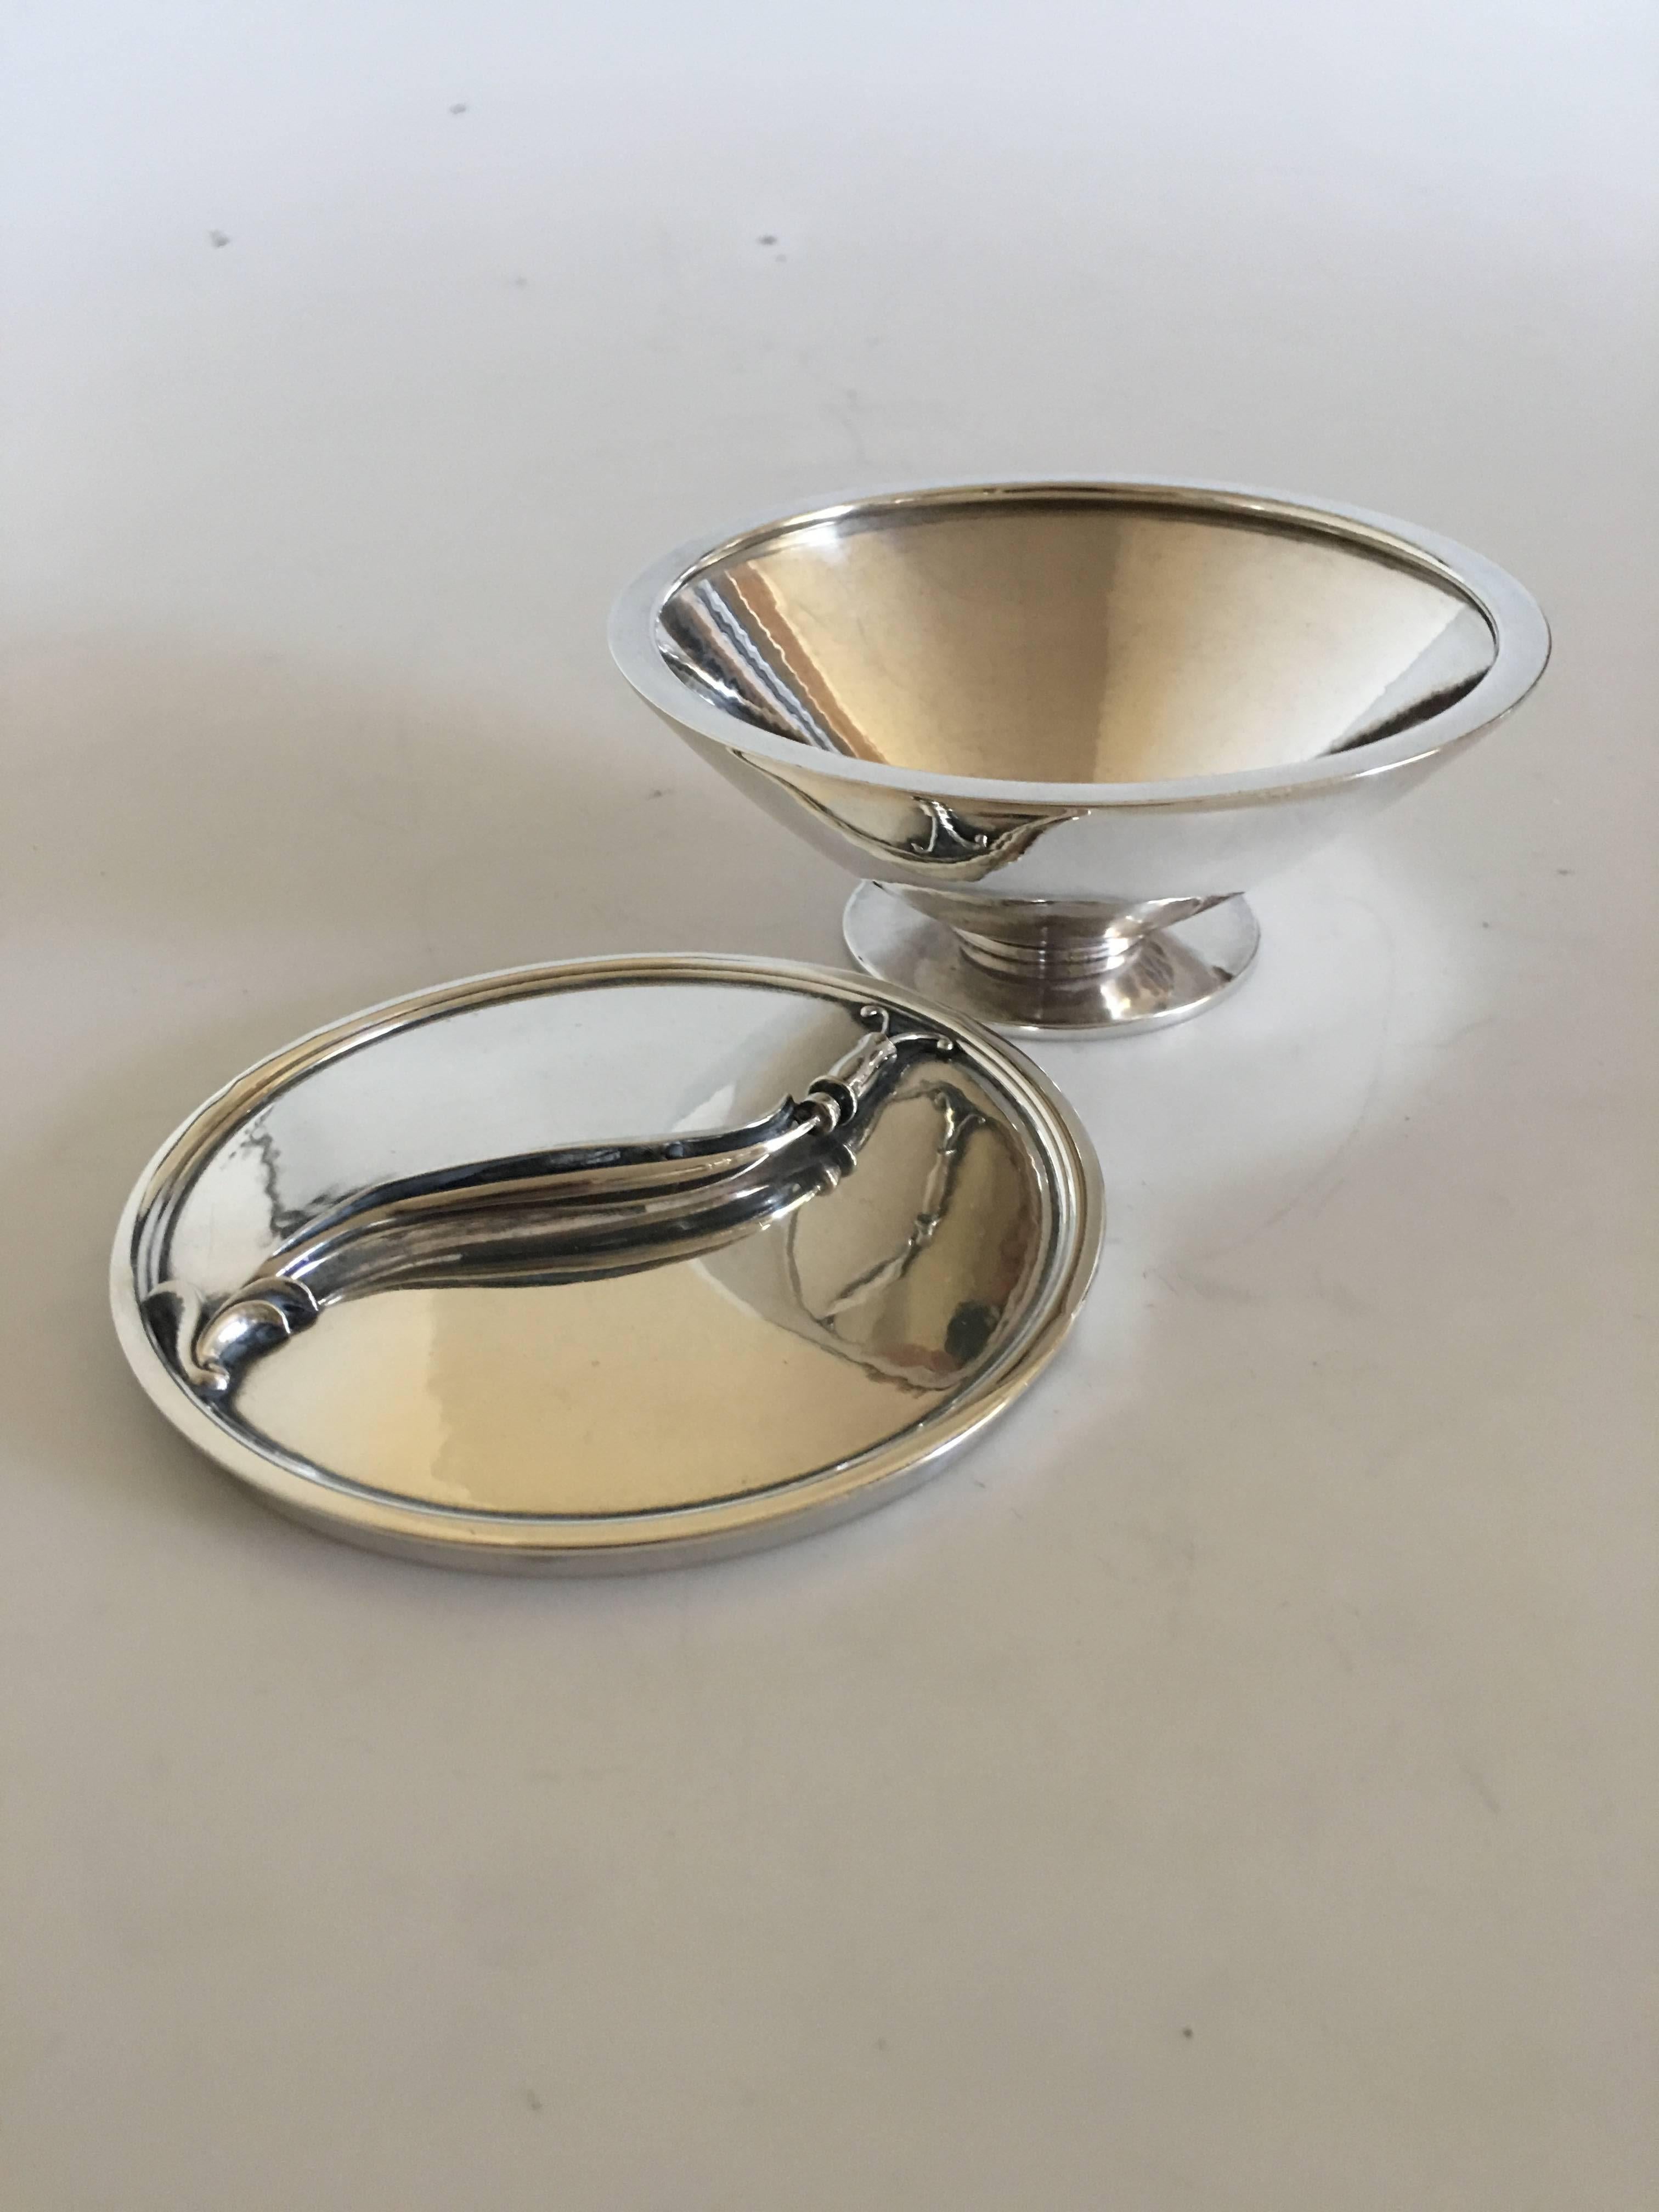 Georg Jensen sterling silver lidded bowl no. 236. Measure: 5.2 cm height (2 3/64